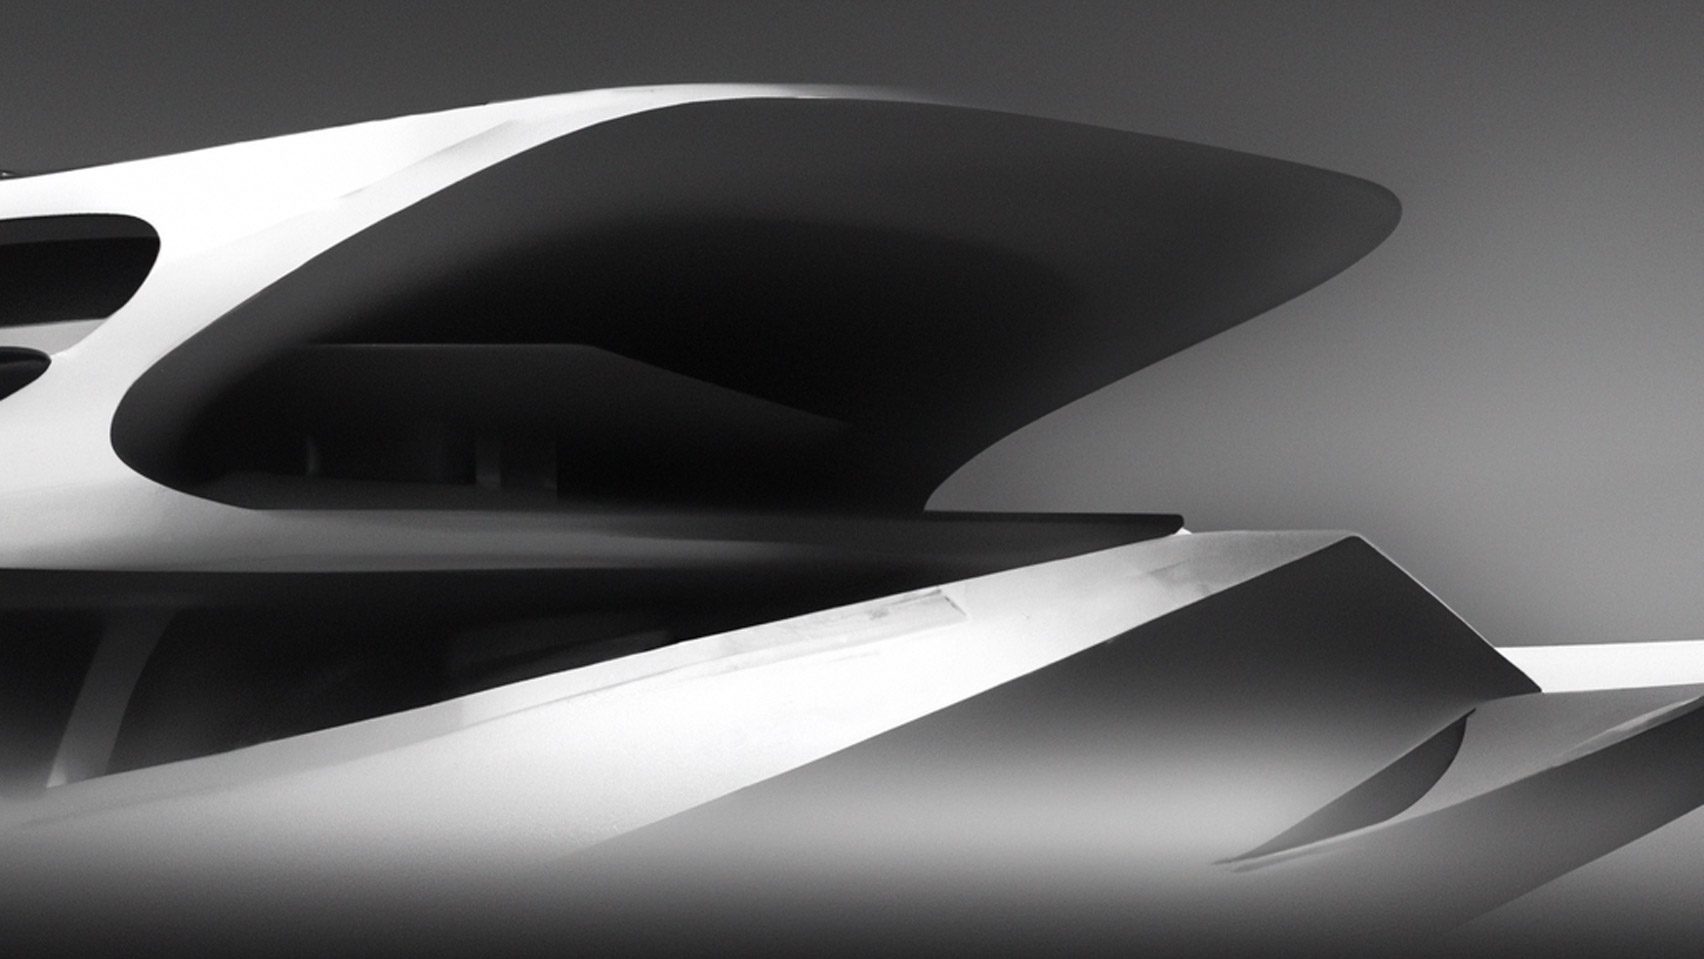 Zaha Hadid Architects image created using DALL-E 2